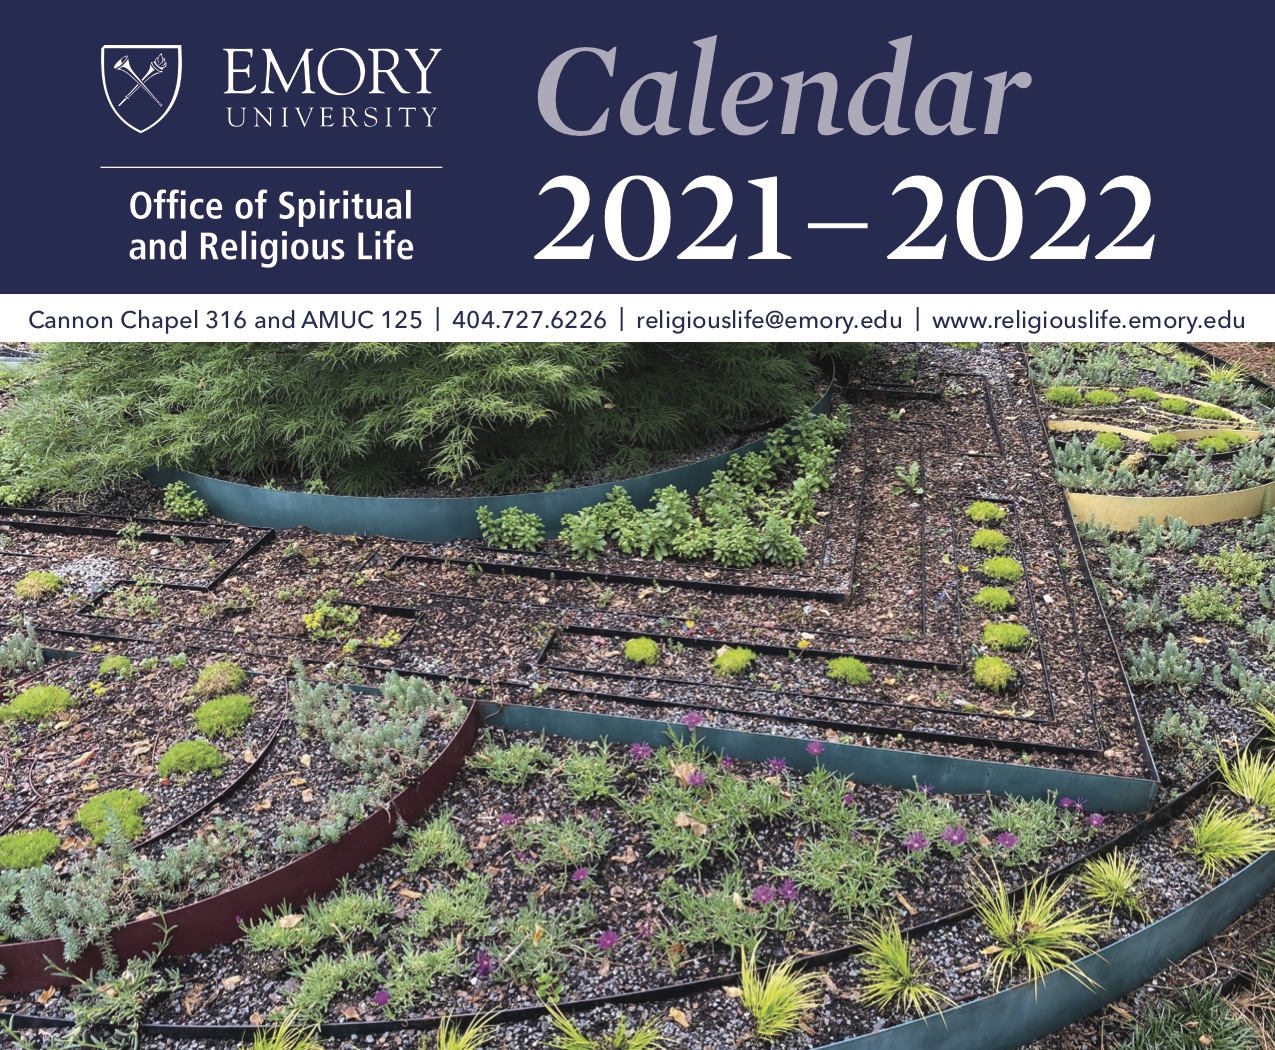 Emory Calendar 2022 Osrl Calendar 2021-2022 | Emory University | Atlanta Ga